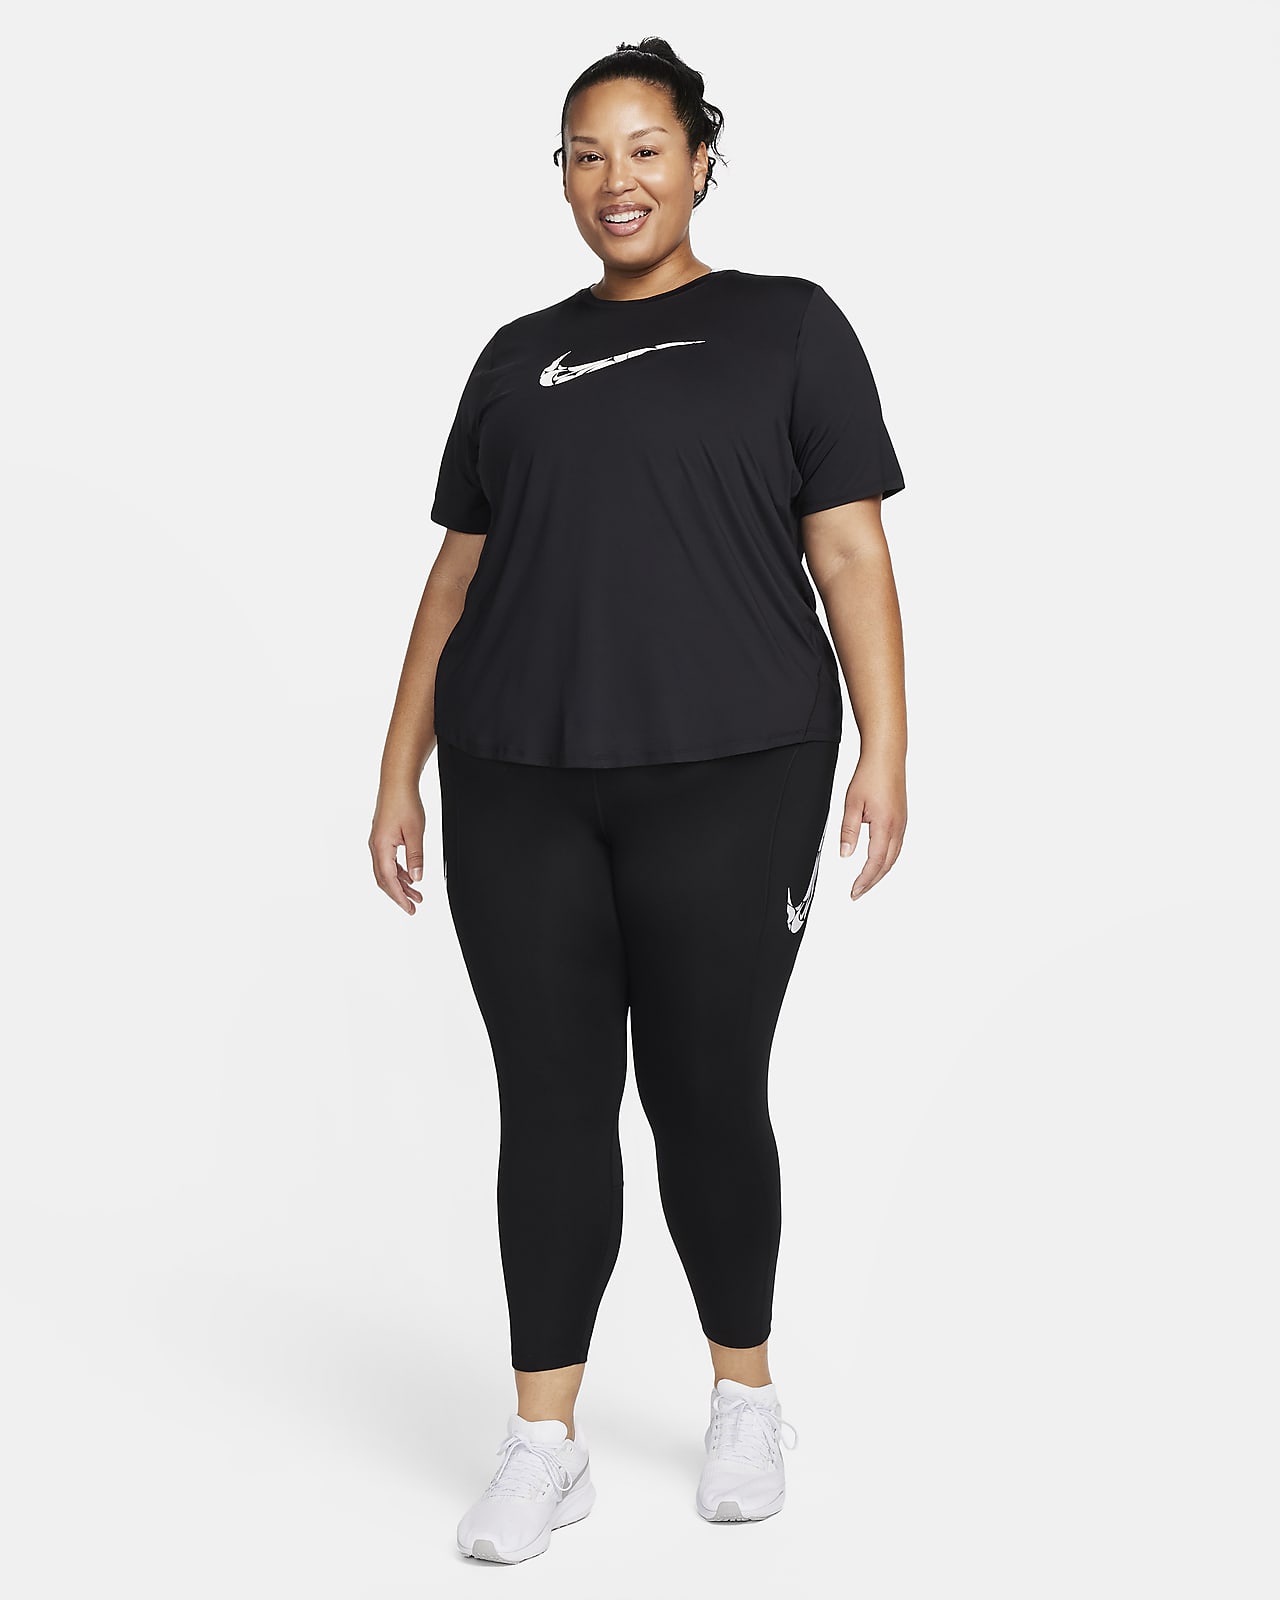 Women's Plus Size Running Shorts. Nike CA